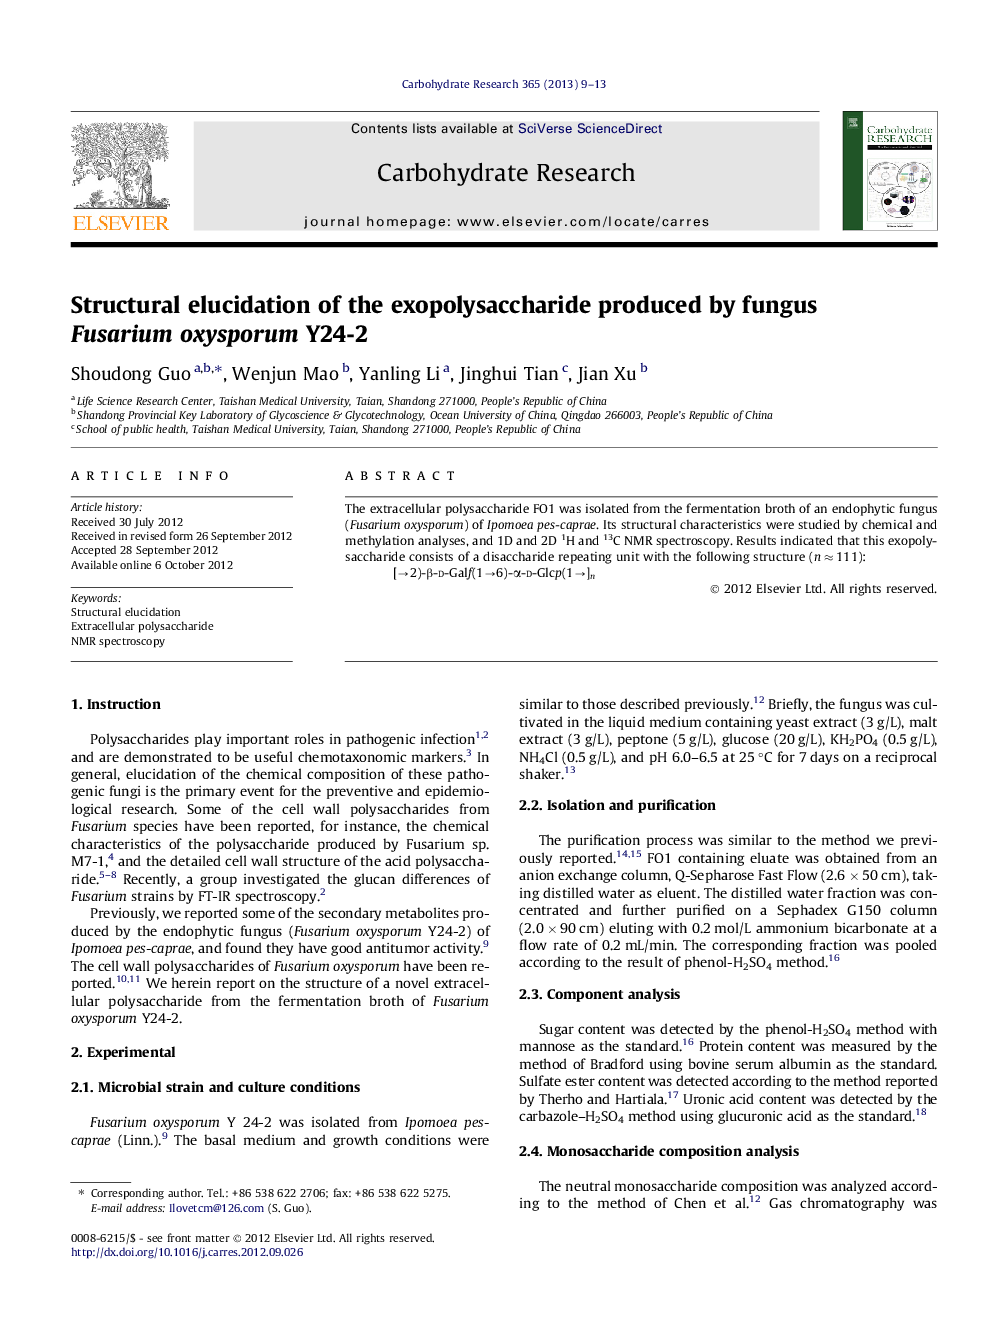 Structural elucidation of the exopolysaccharide produced by fungus Fusarium oxysporum Y24-2